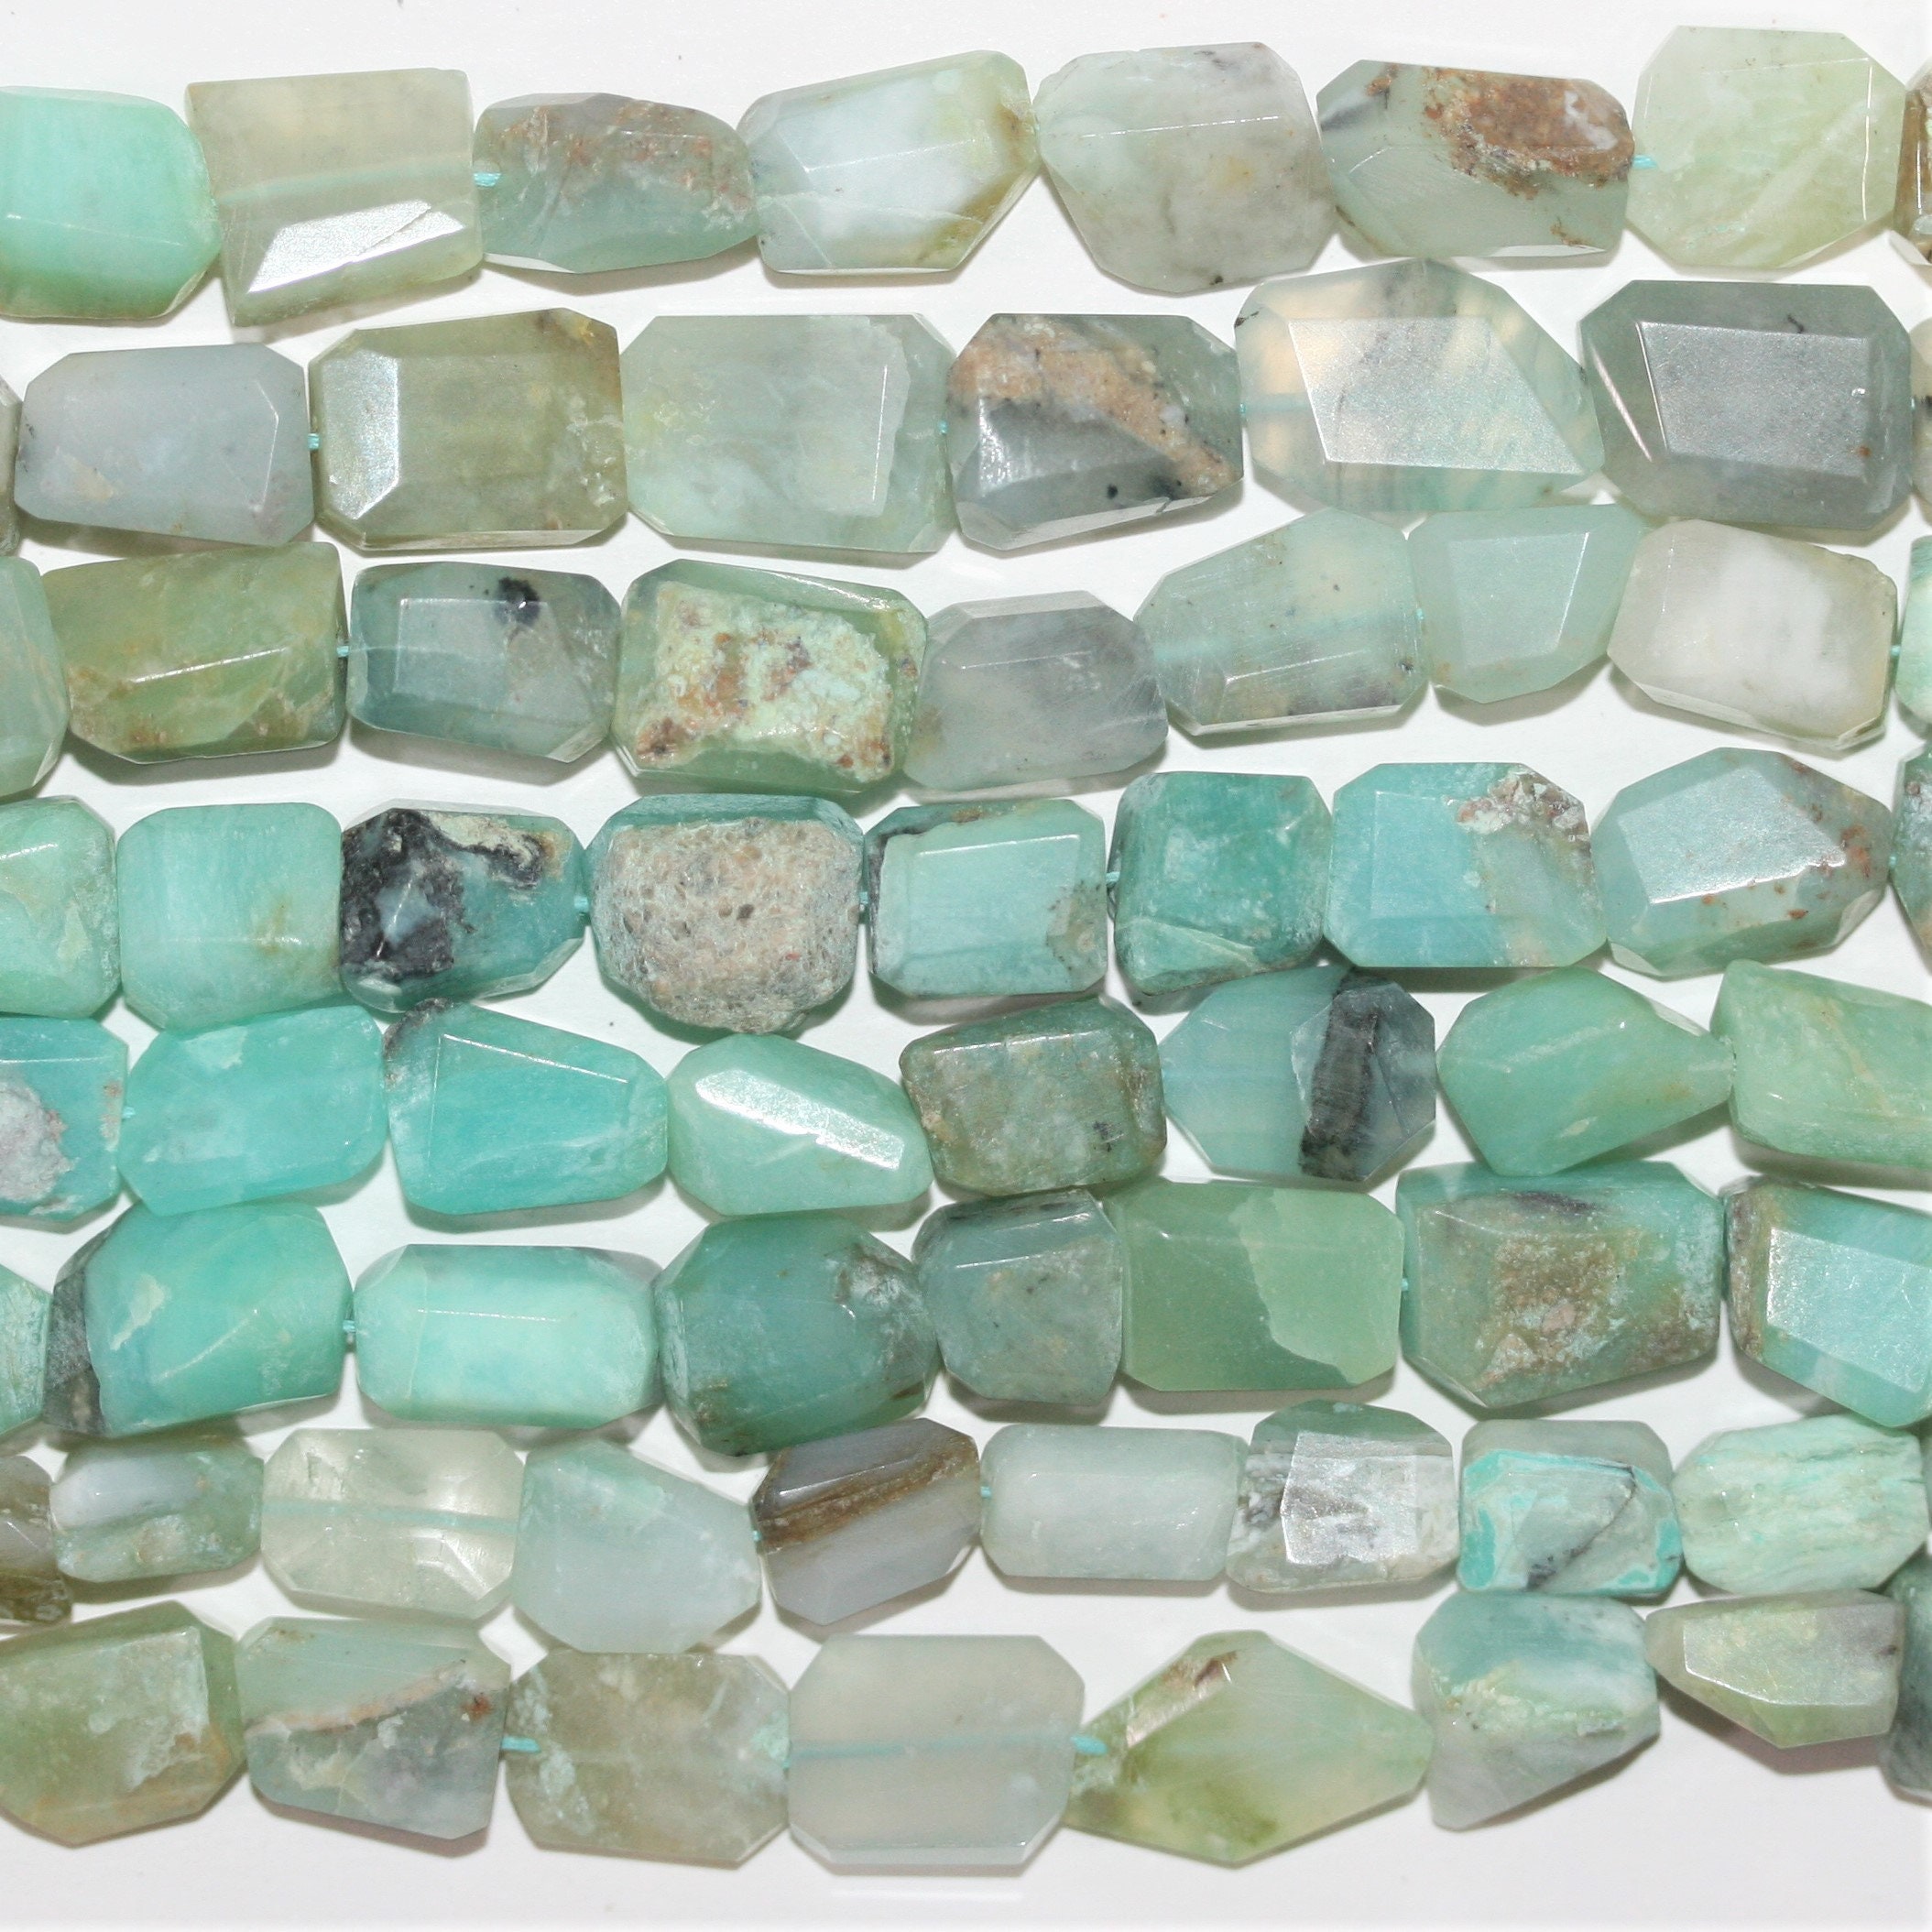 RARE GEMSTONE | Blue Peruvian Opal Gemstone Plain Roundels Beads 15 Inch  Strand Size 8-9 MM Gemstone Making Jewelry | Blue Opal Beads (65+ Beads